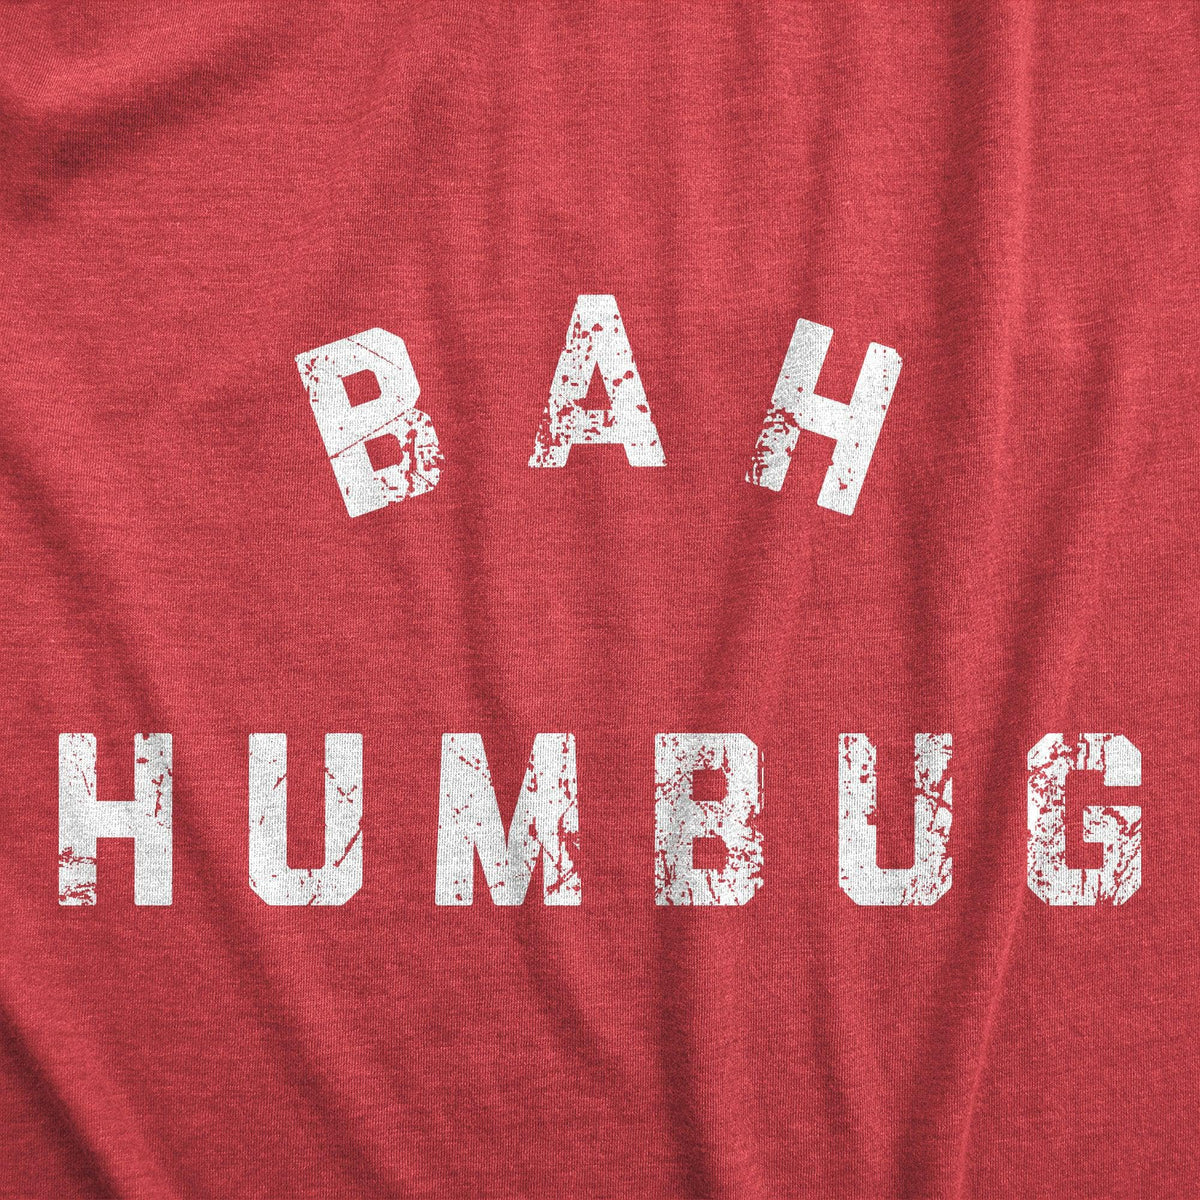 Bah Humbug Men&#39;s Tshirt  -  Crazy Dog T-Shirts